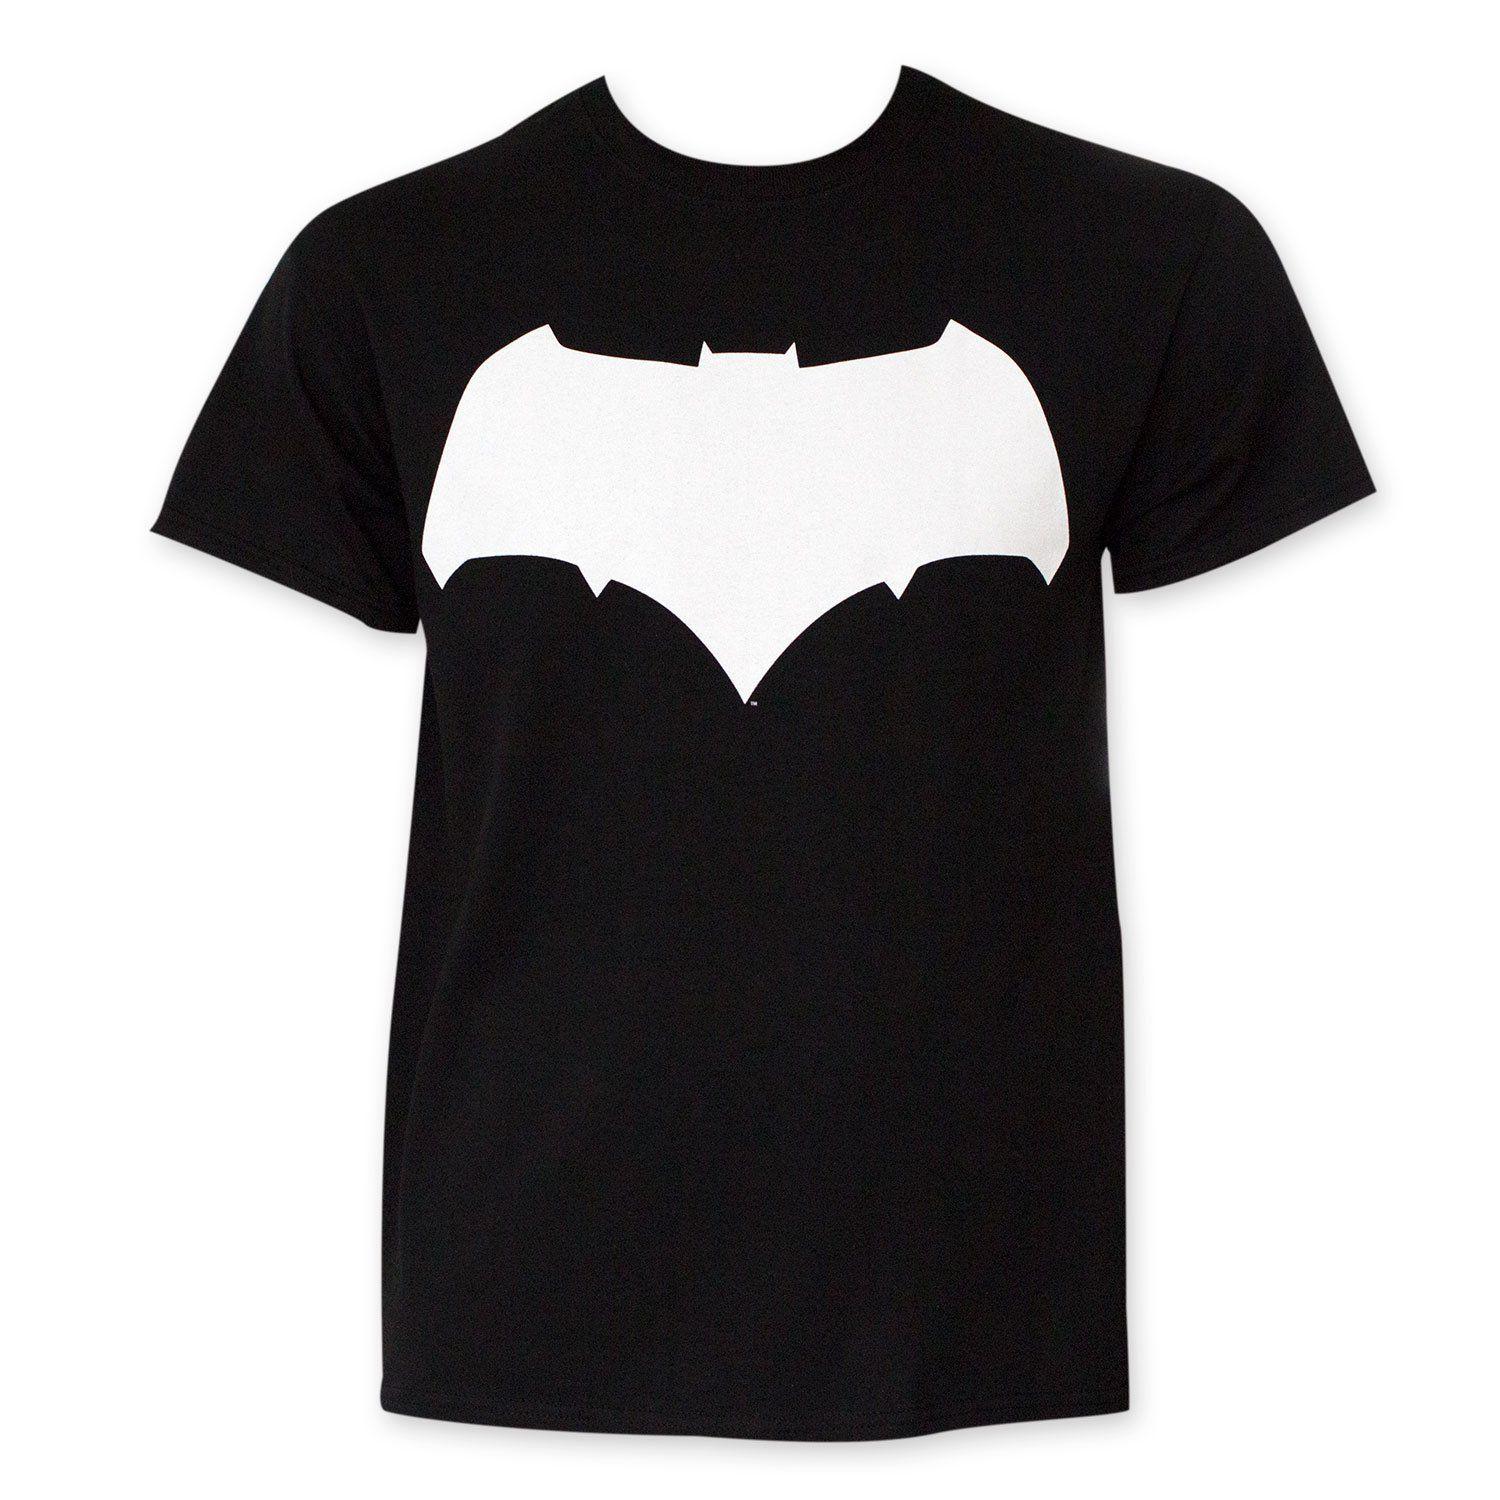 White Batman Logo - Amazon.com: Batman V Superman And White Batman Logo Tee Shirt: Clothing